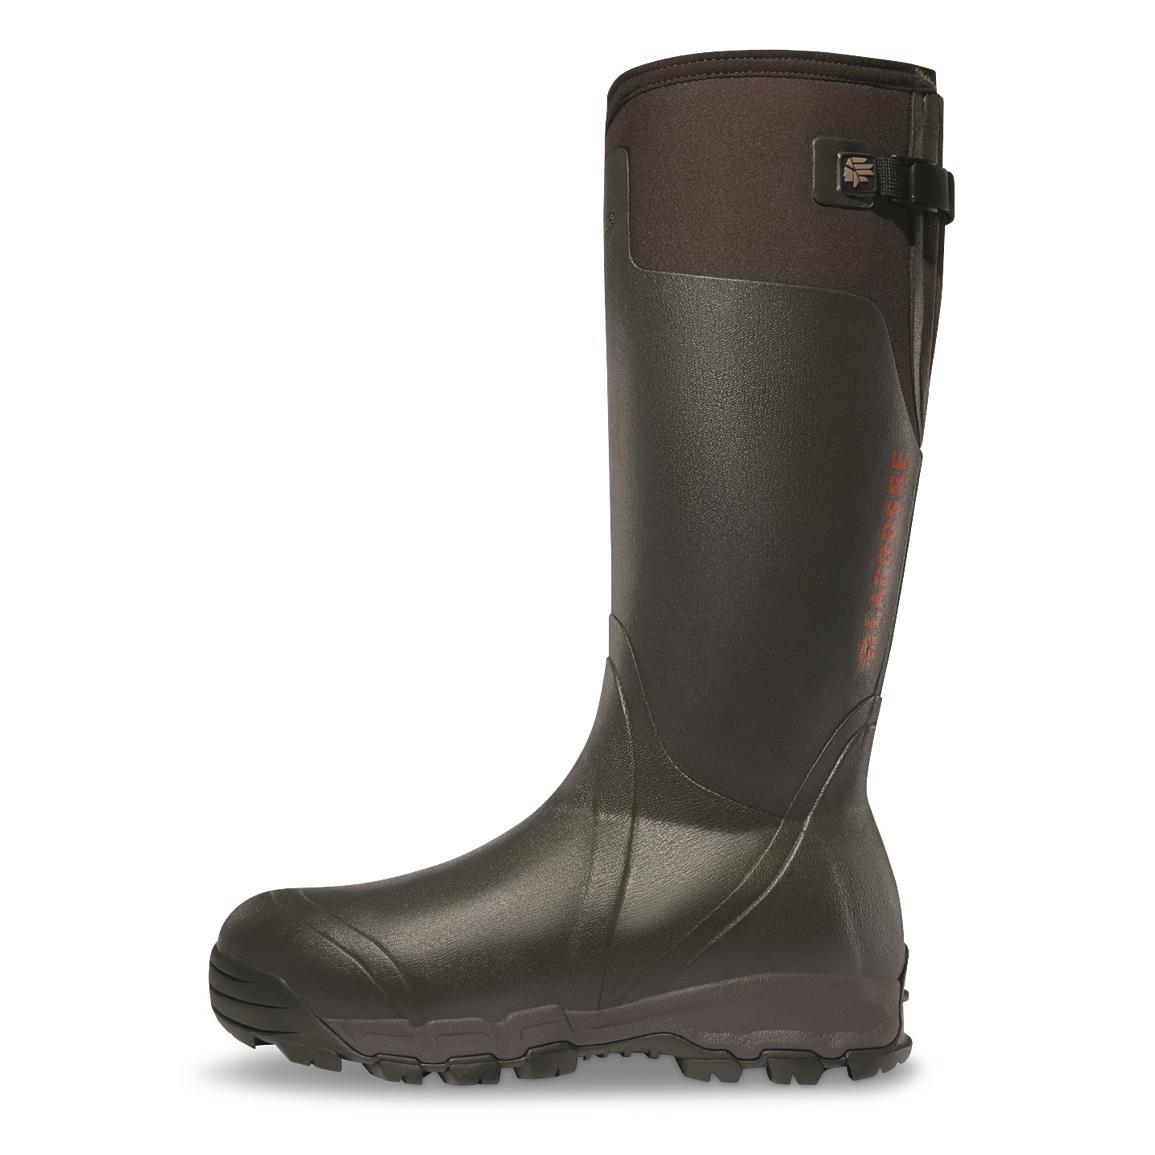 LaCrosse Men's Alphaburly Pro 18" Waterproof Insulated Hunting Boots, 1,600 Gram, Brown/Black, Brown